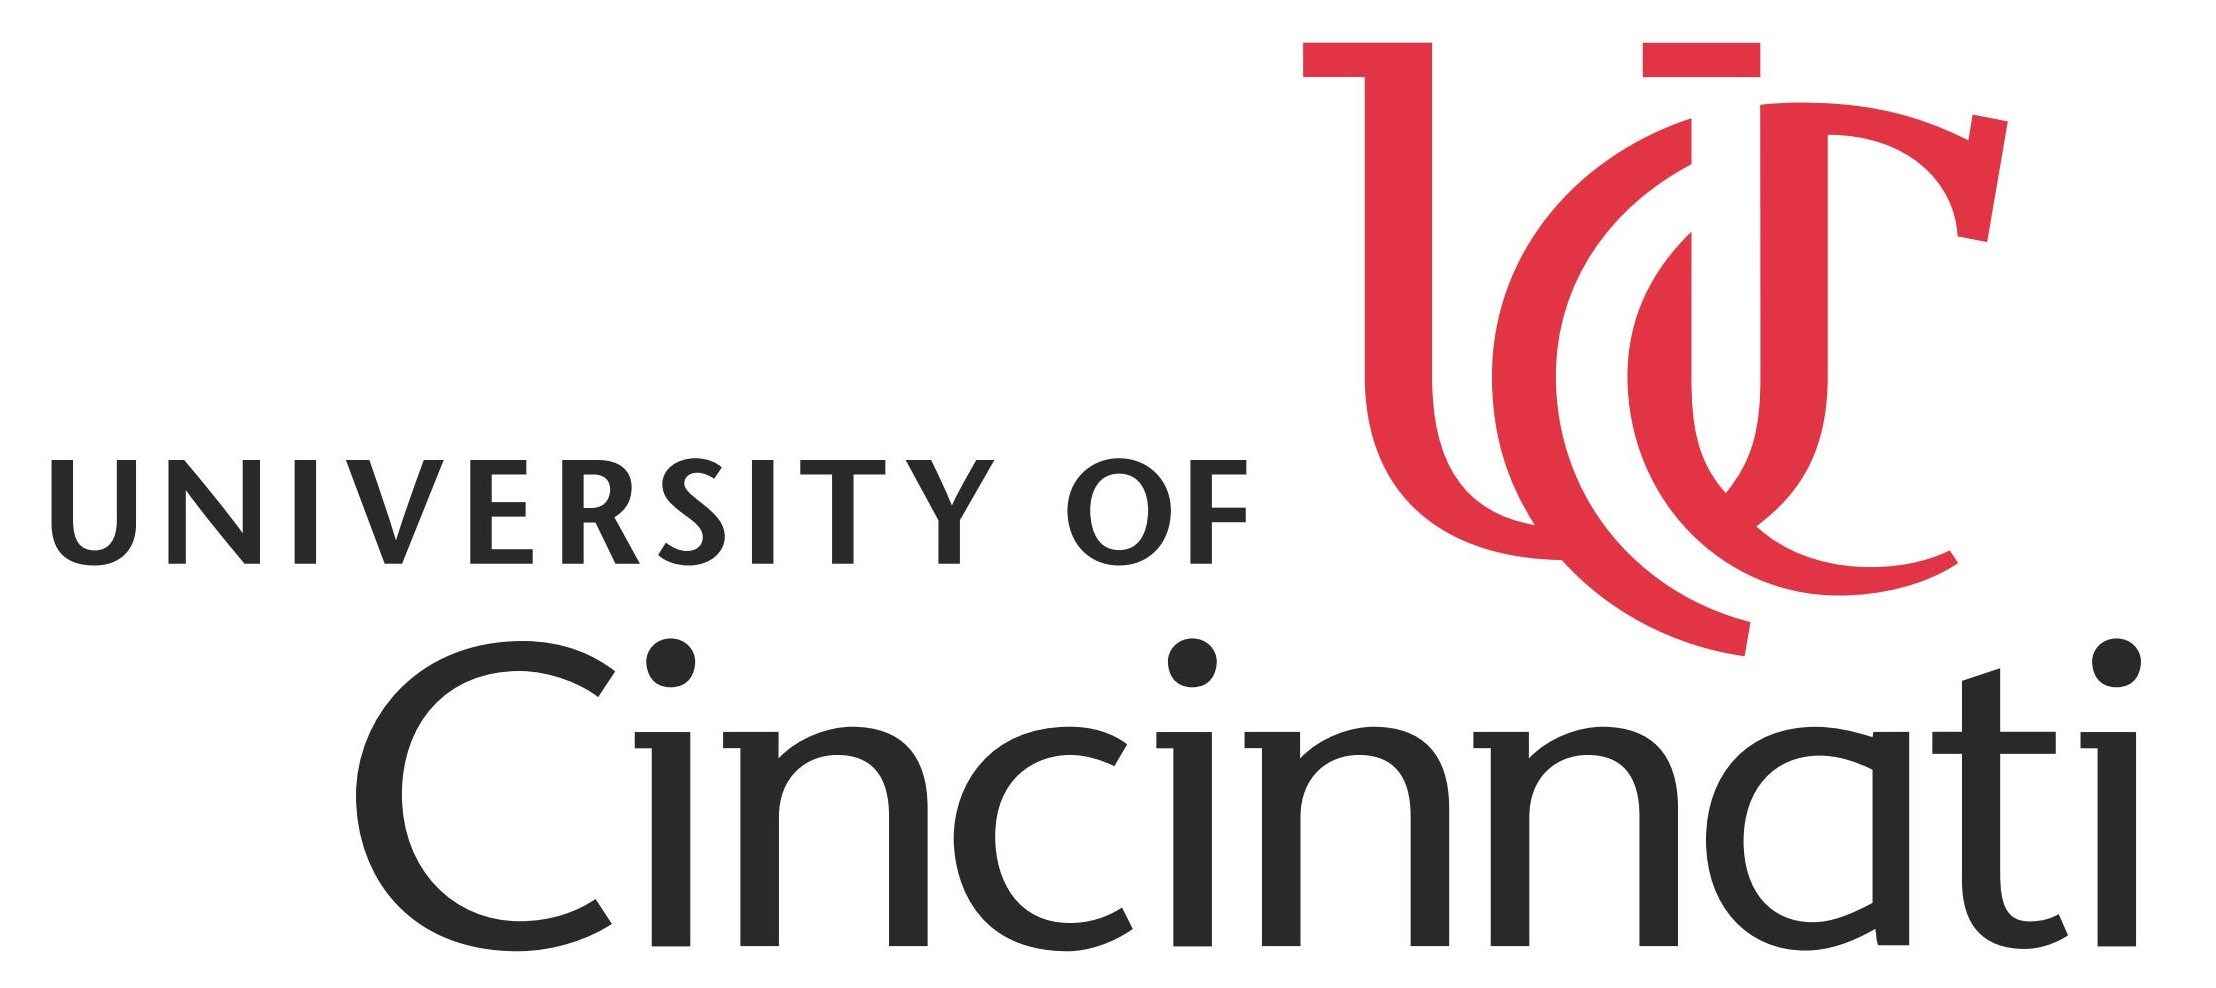 UC - University of Cincinnati Logo [uc.edu]